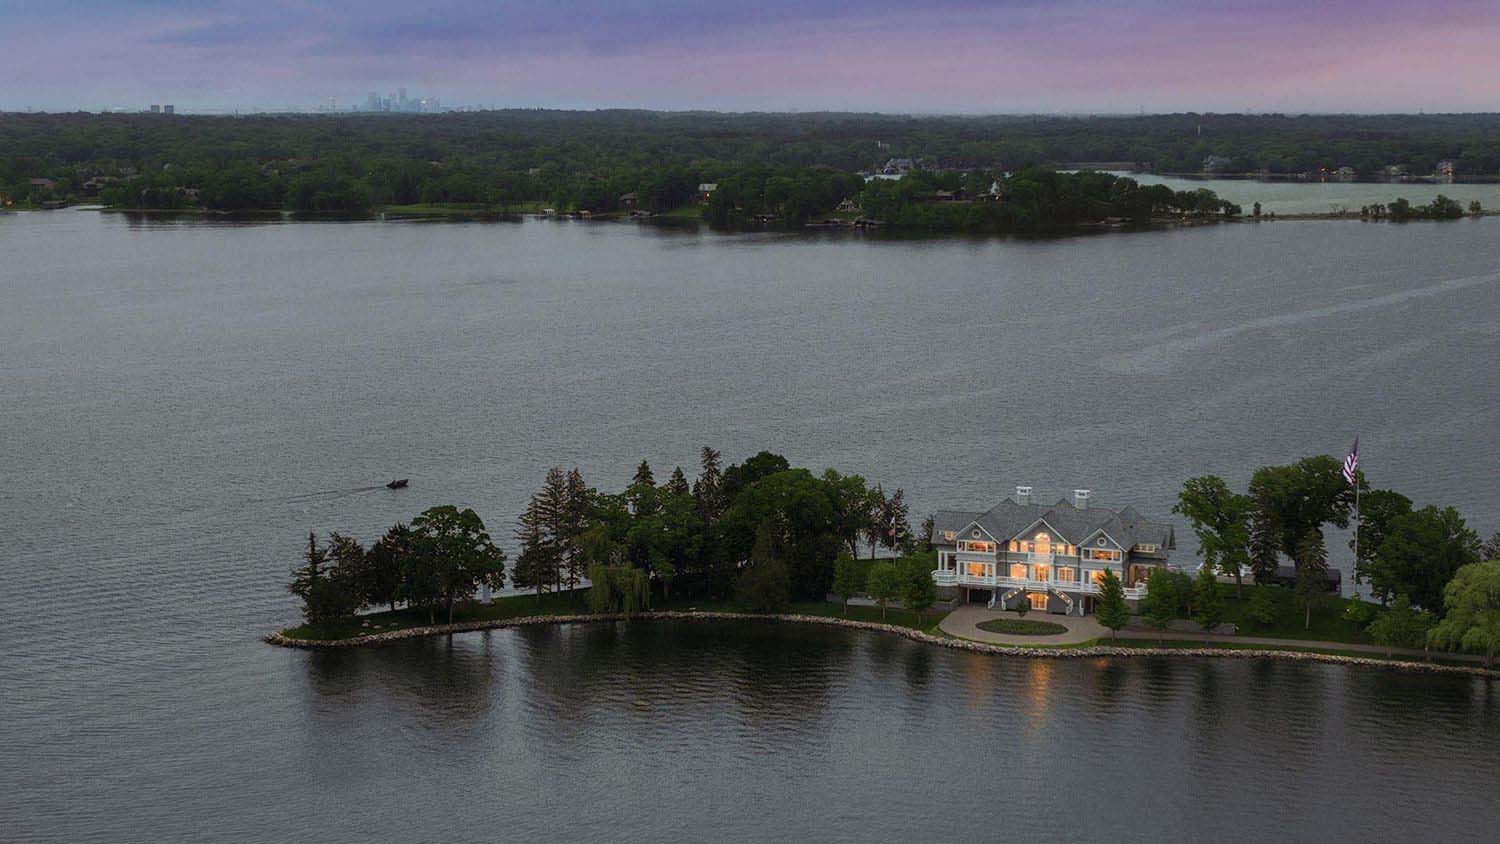 east-coast-shingle-style-lake-house-exterior-aerial-view-at-dusk